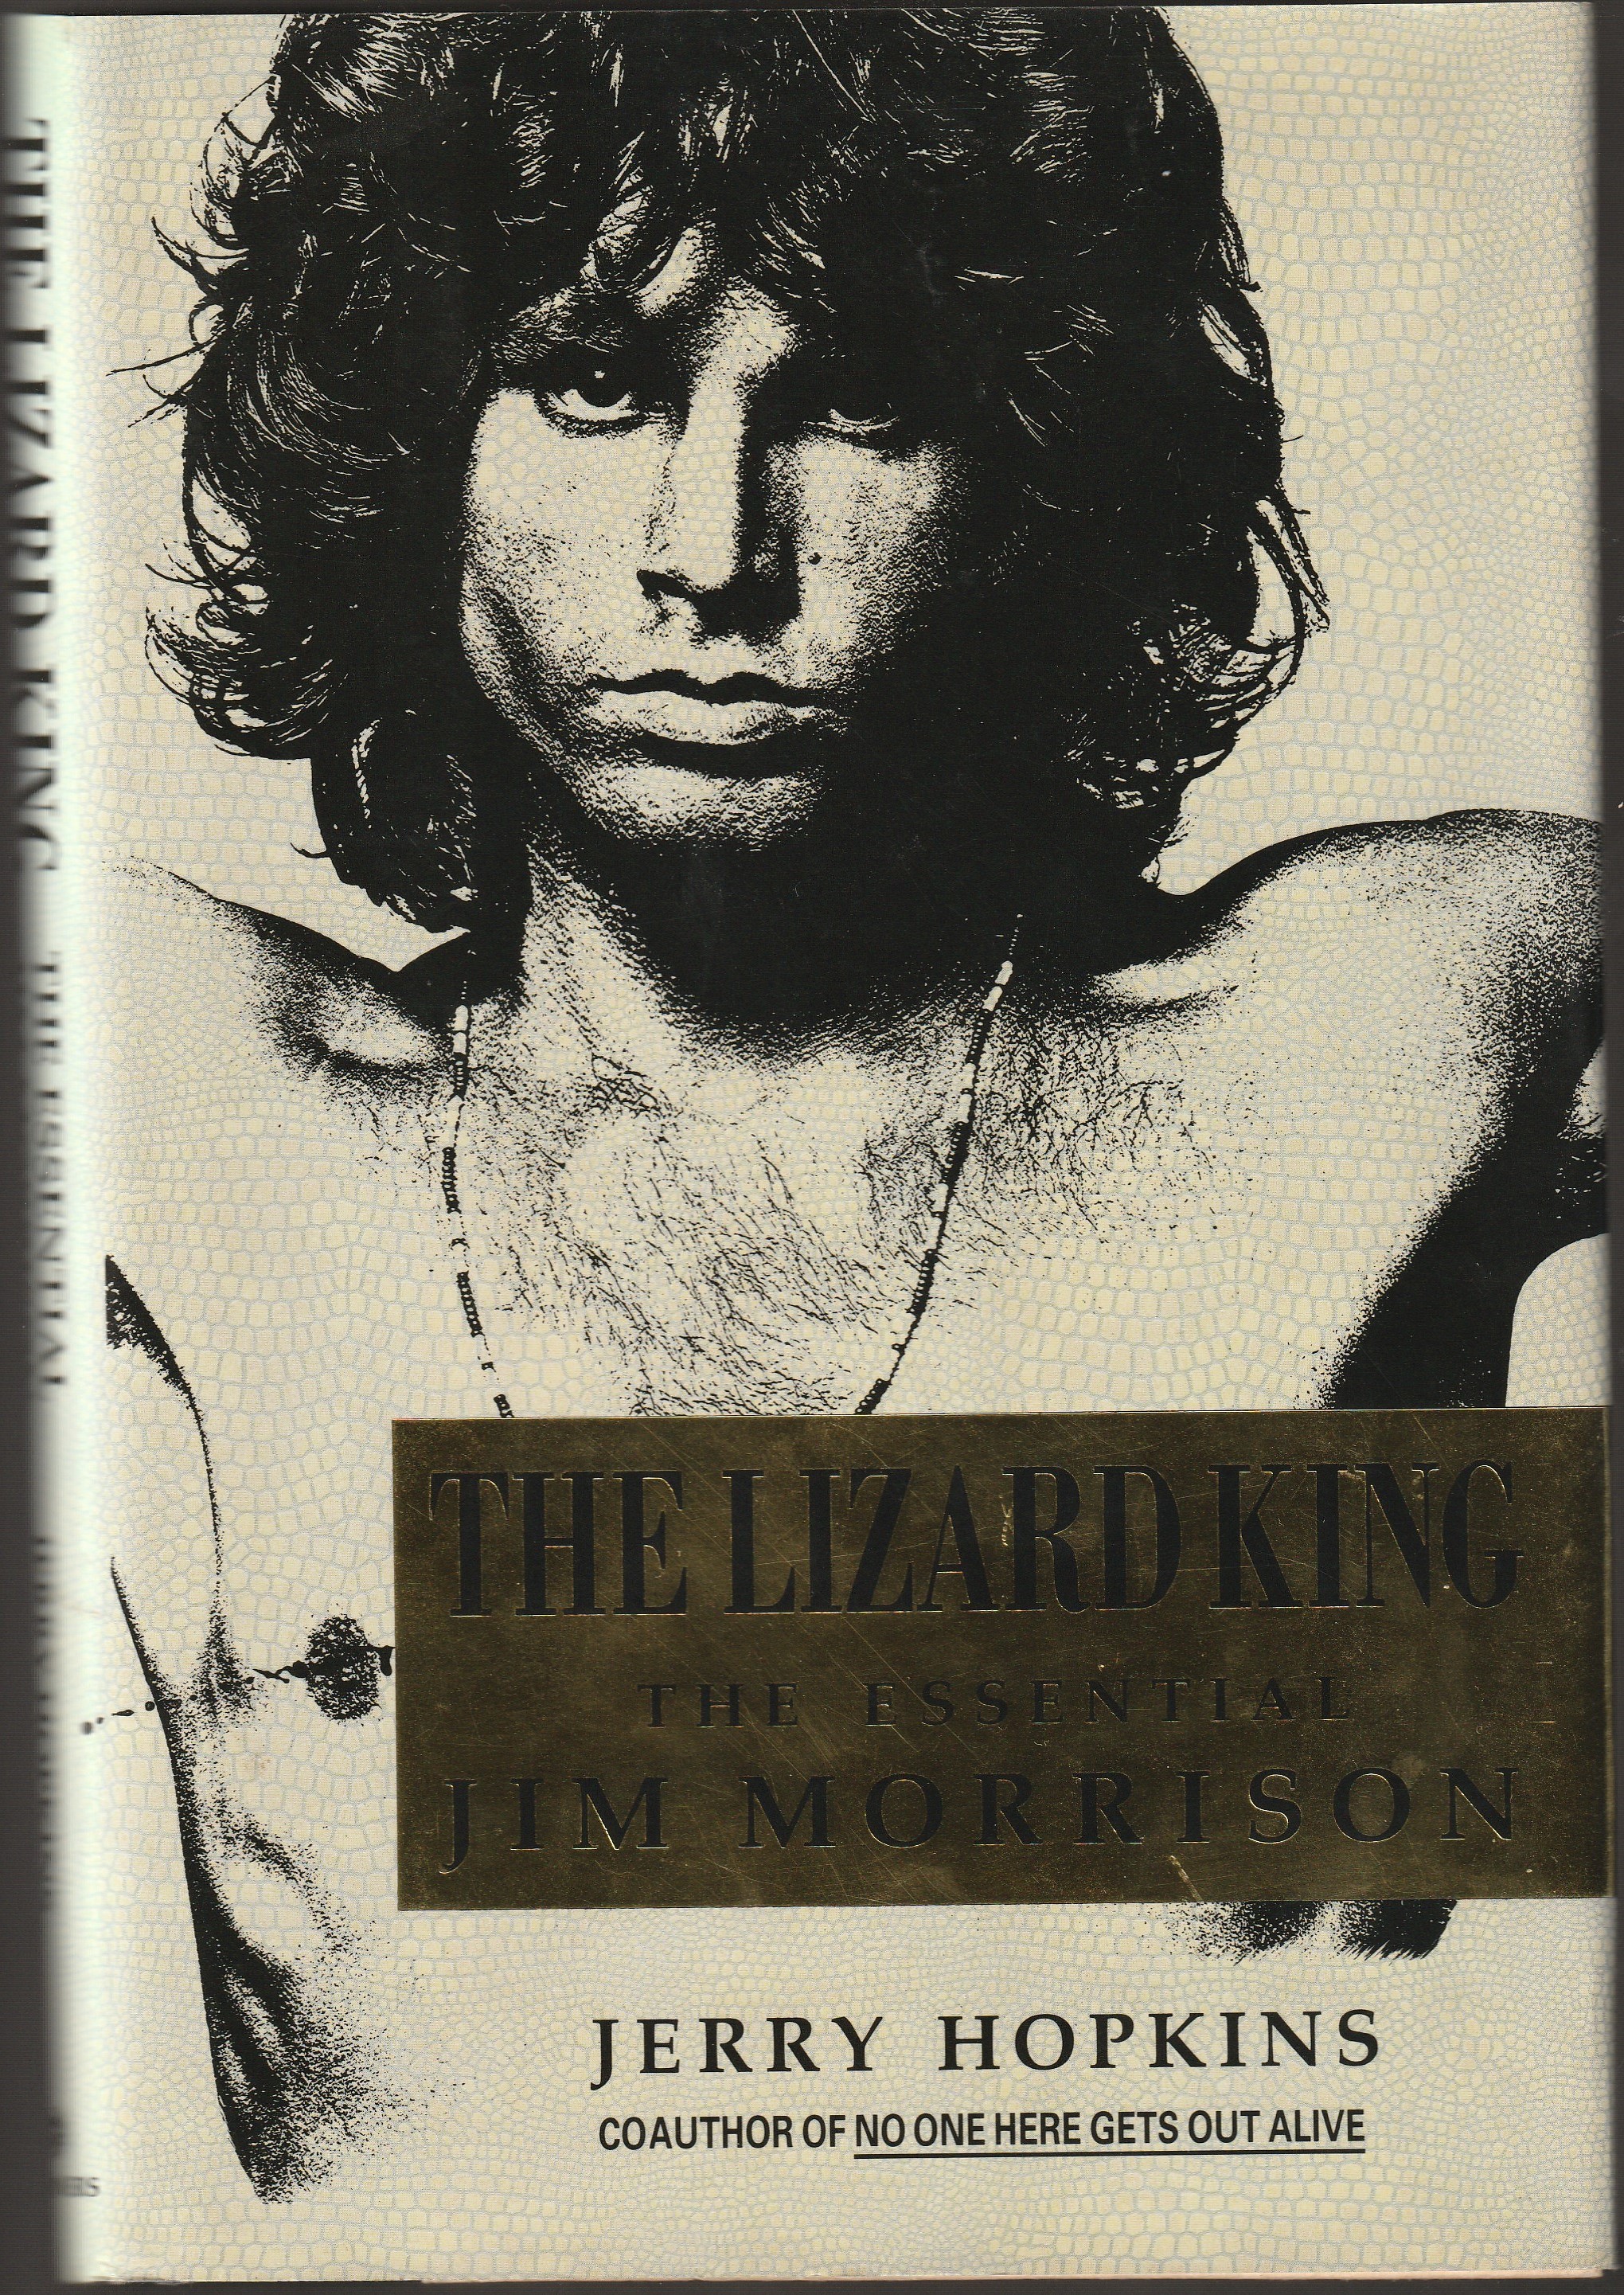 The Lizard King: The Essential Jim Morrison - Hopkins, Jerry